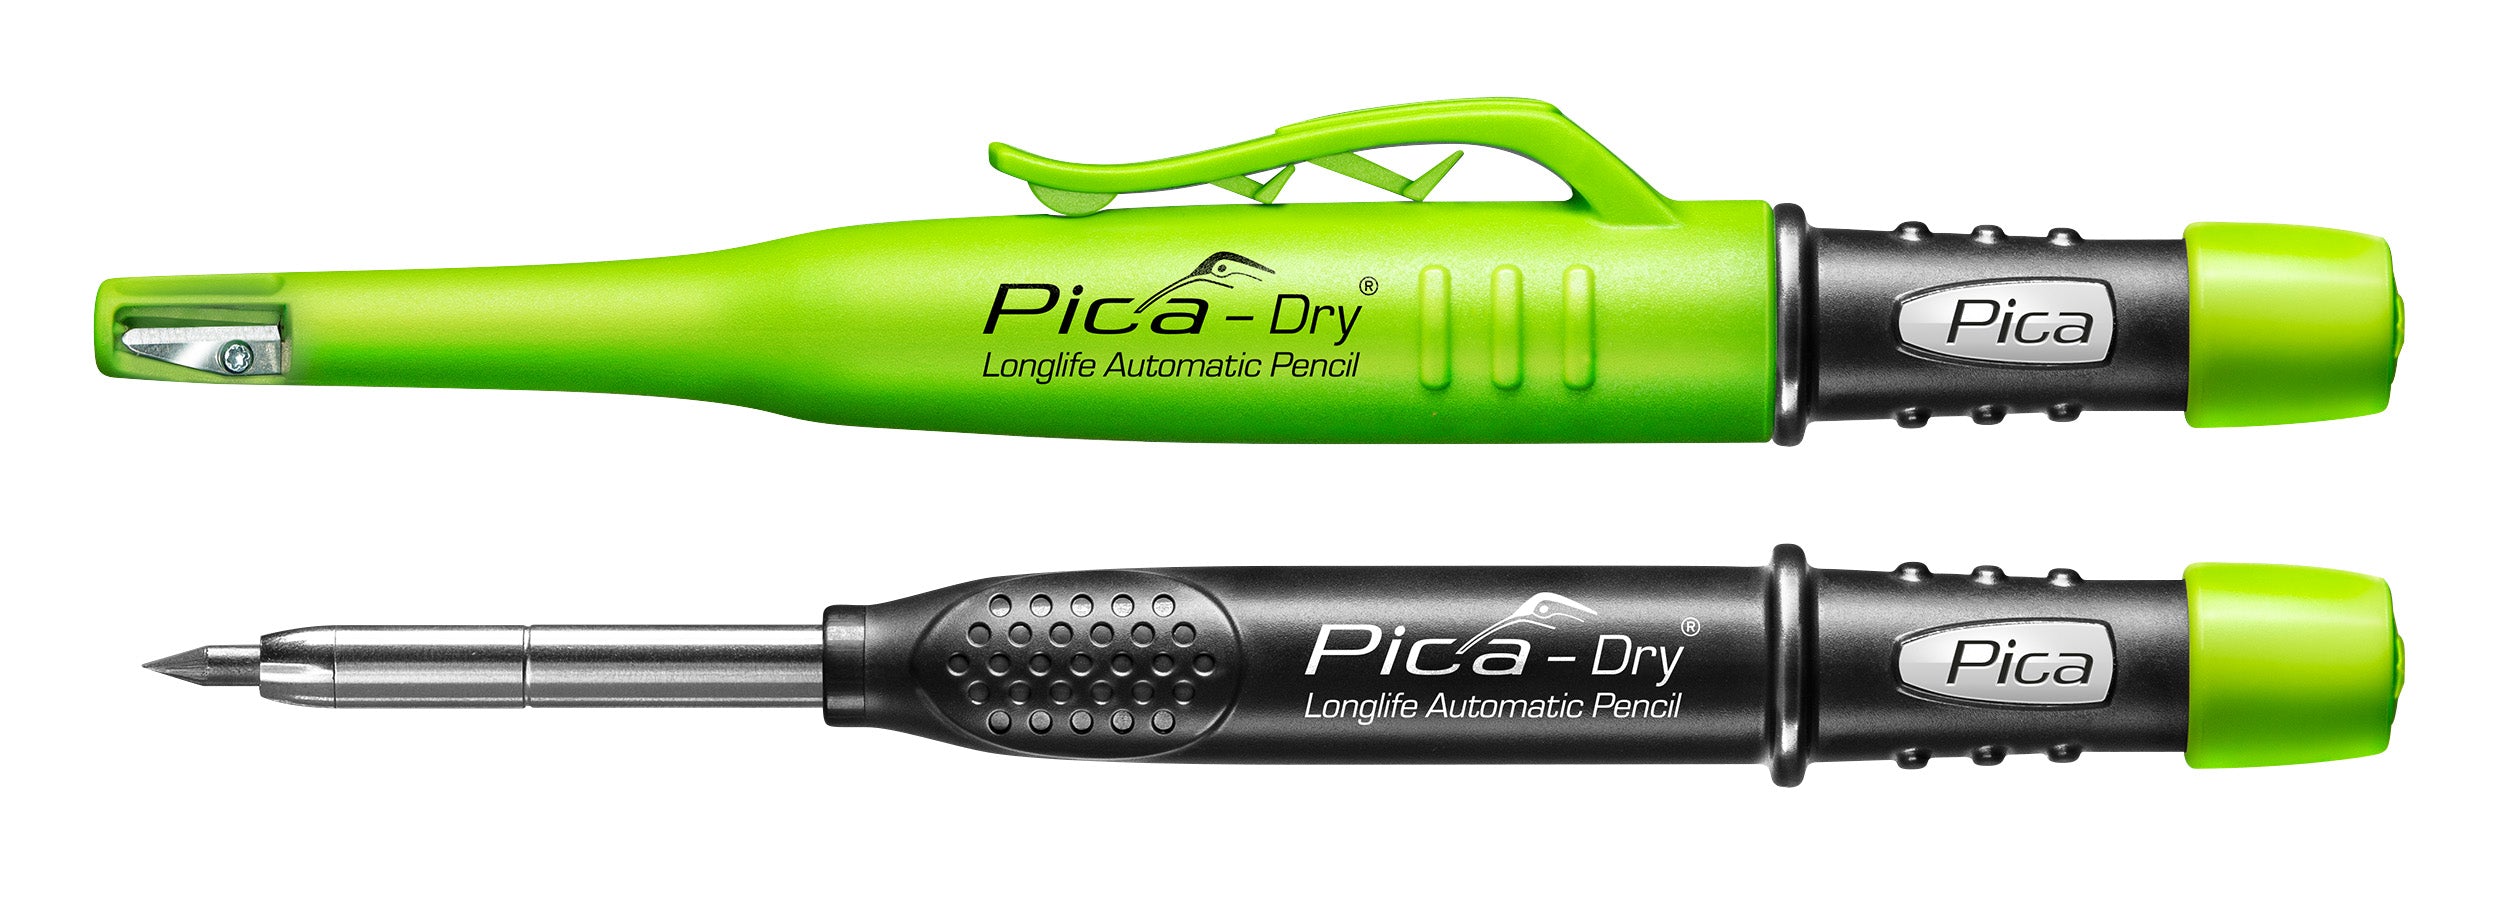 Pica -Dry Pencil